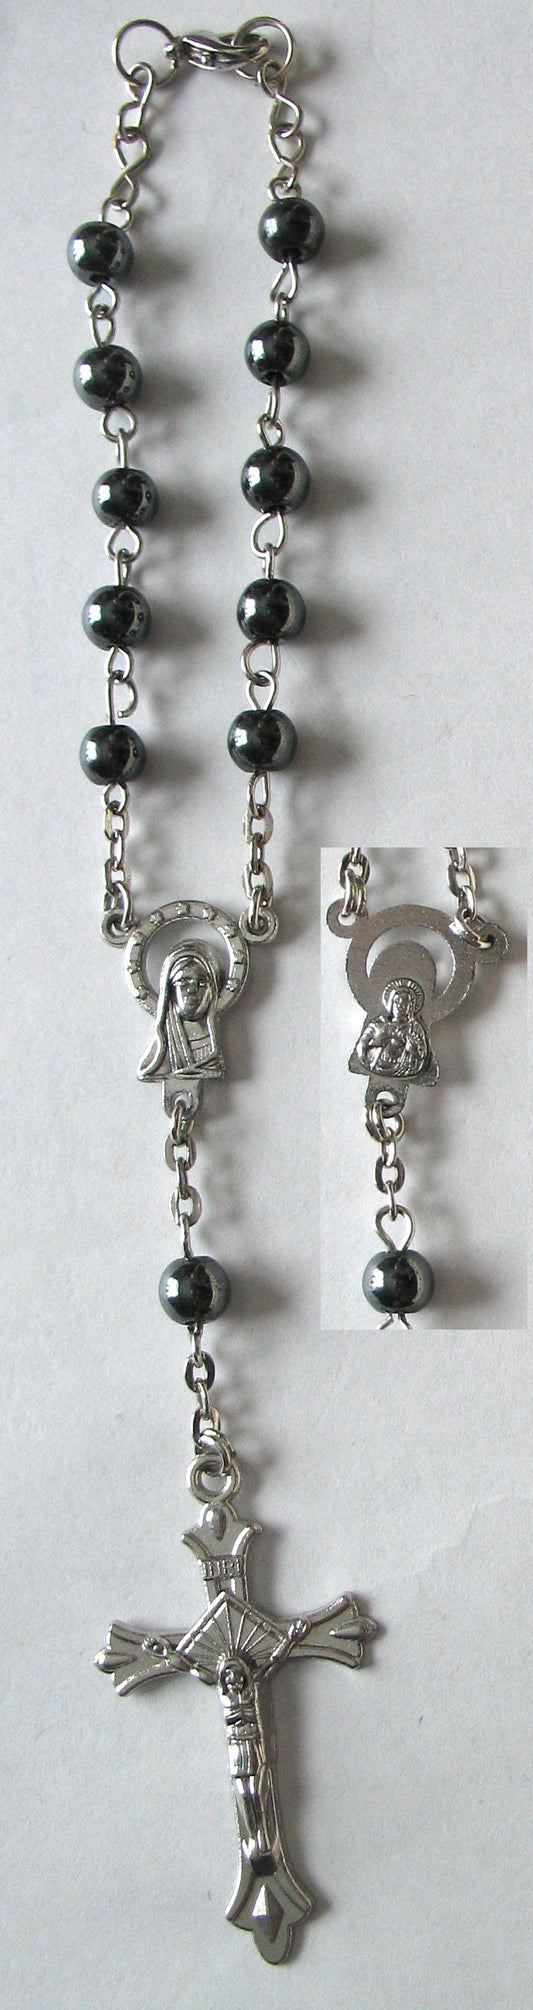 Car Rosary - Chain with Hematite Beads